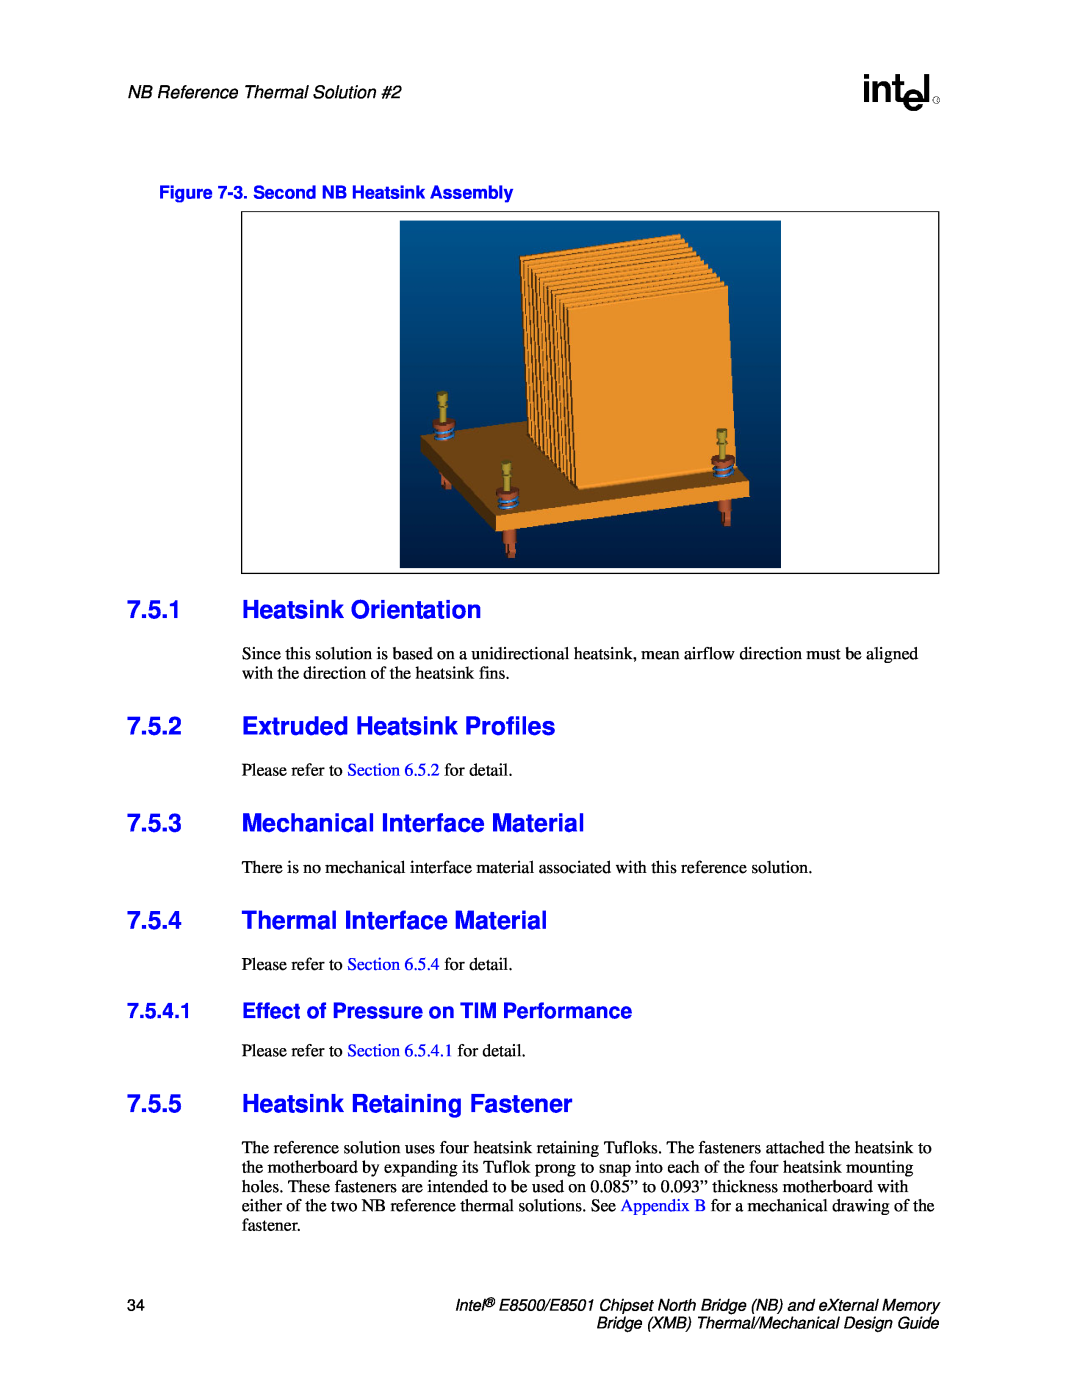 Intel E8501 manual 7.5.1Heatsink Orientation, 7.5.2Extruded Heatsink Profiles, 7.5.3Mechanical Interface Material 